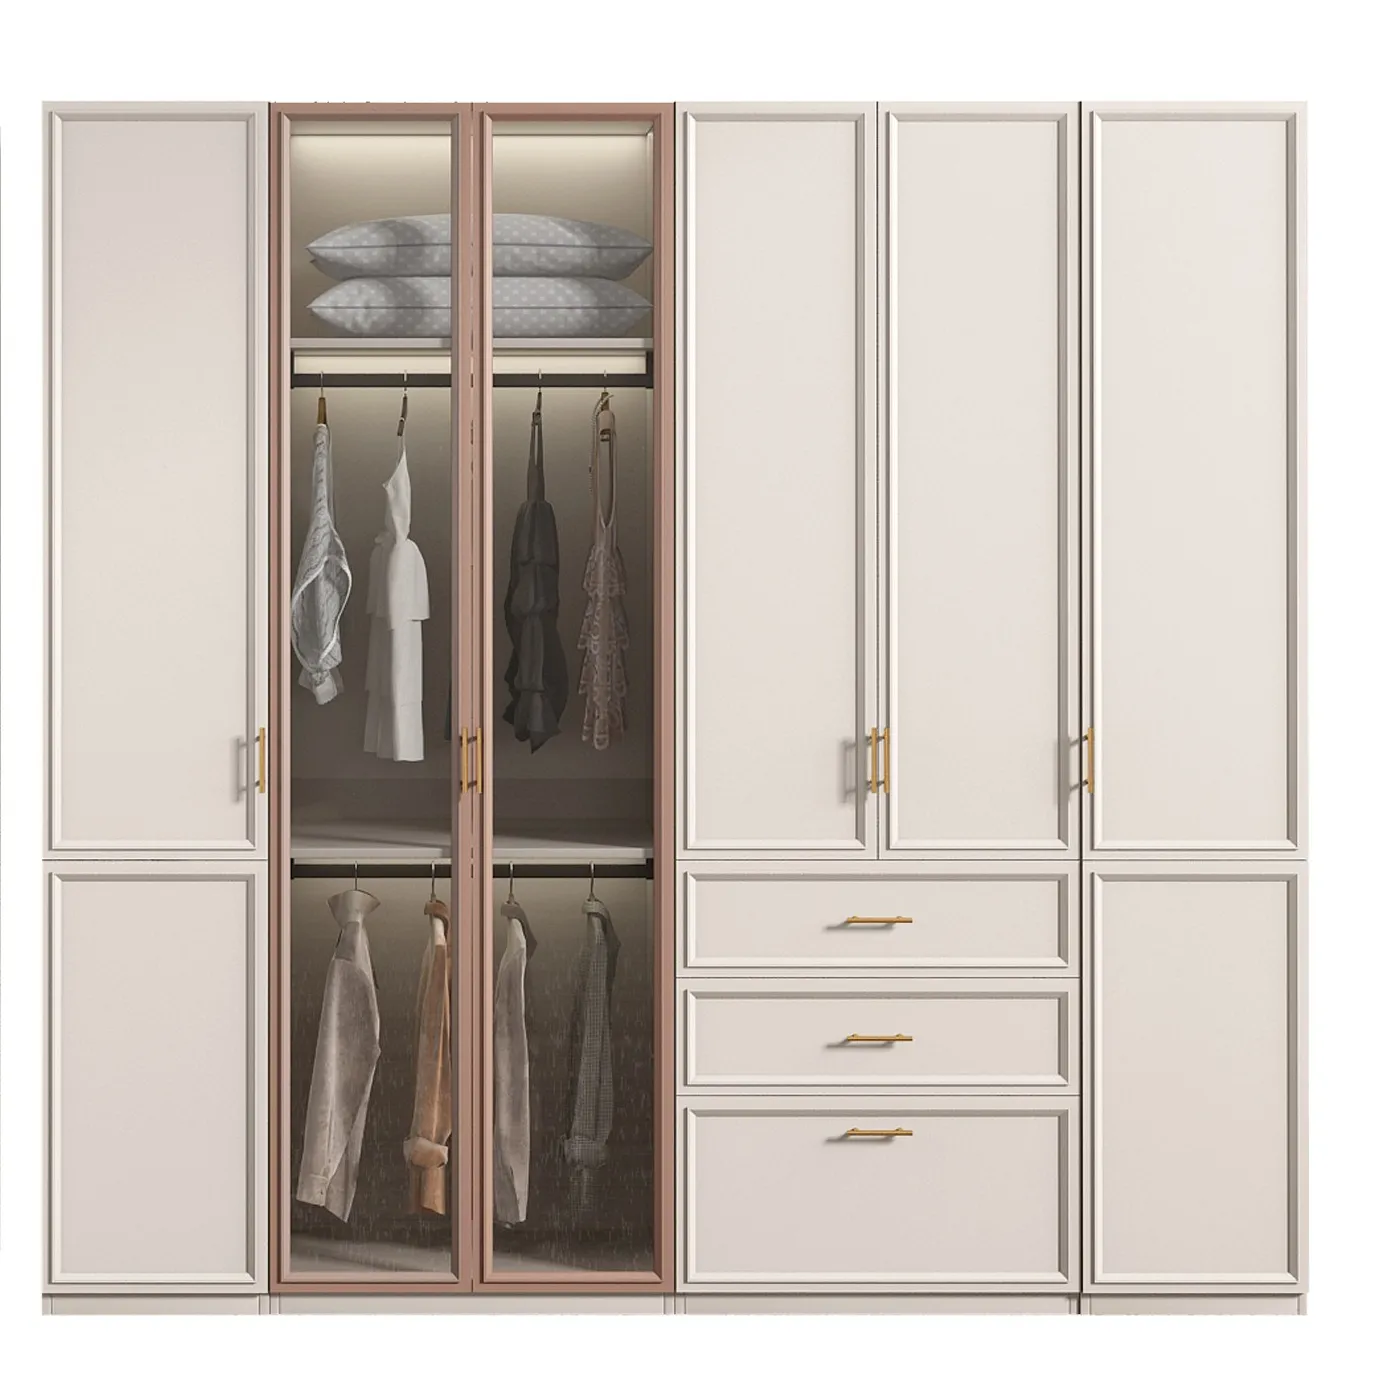 European style wardrobe closet bedroom sliding glass door wooden wardrobe closet